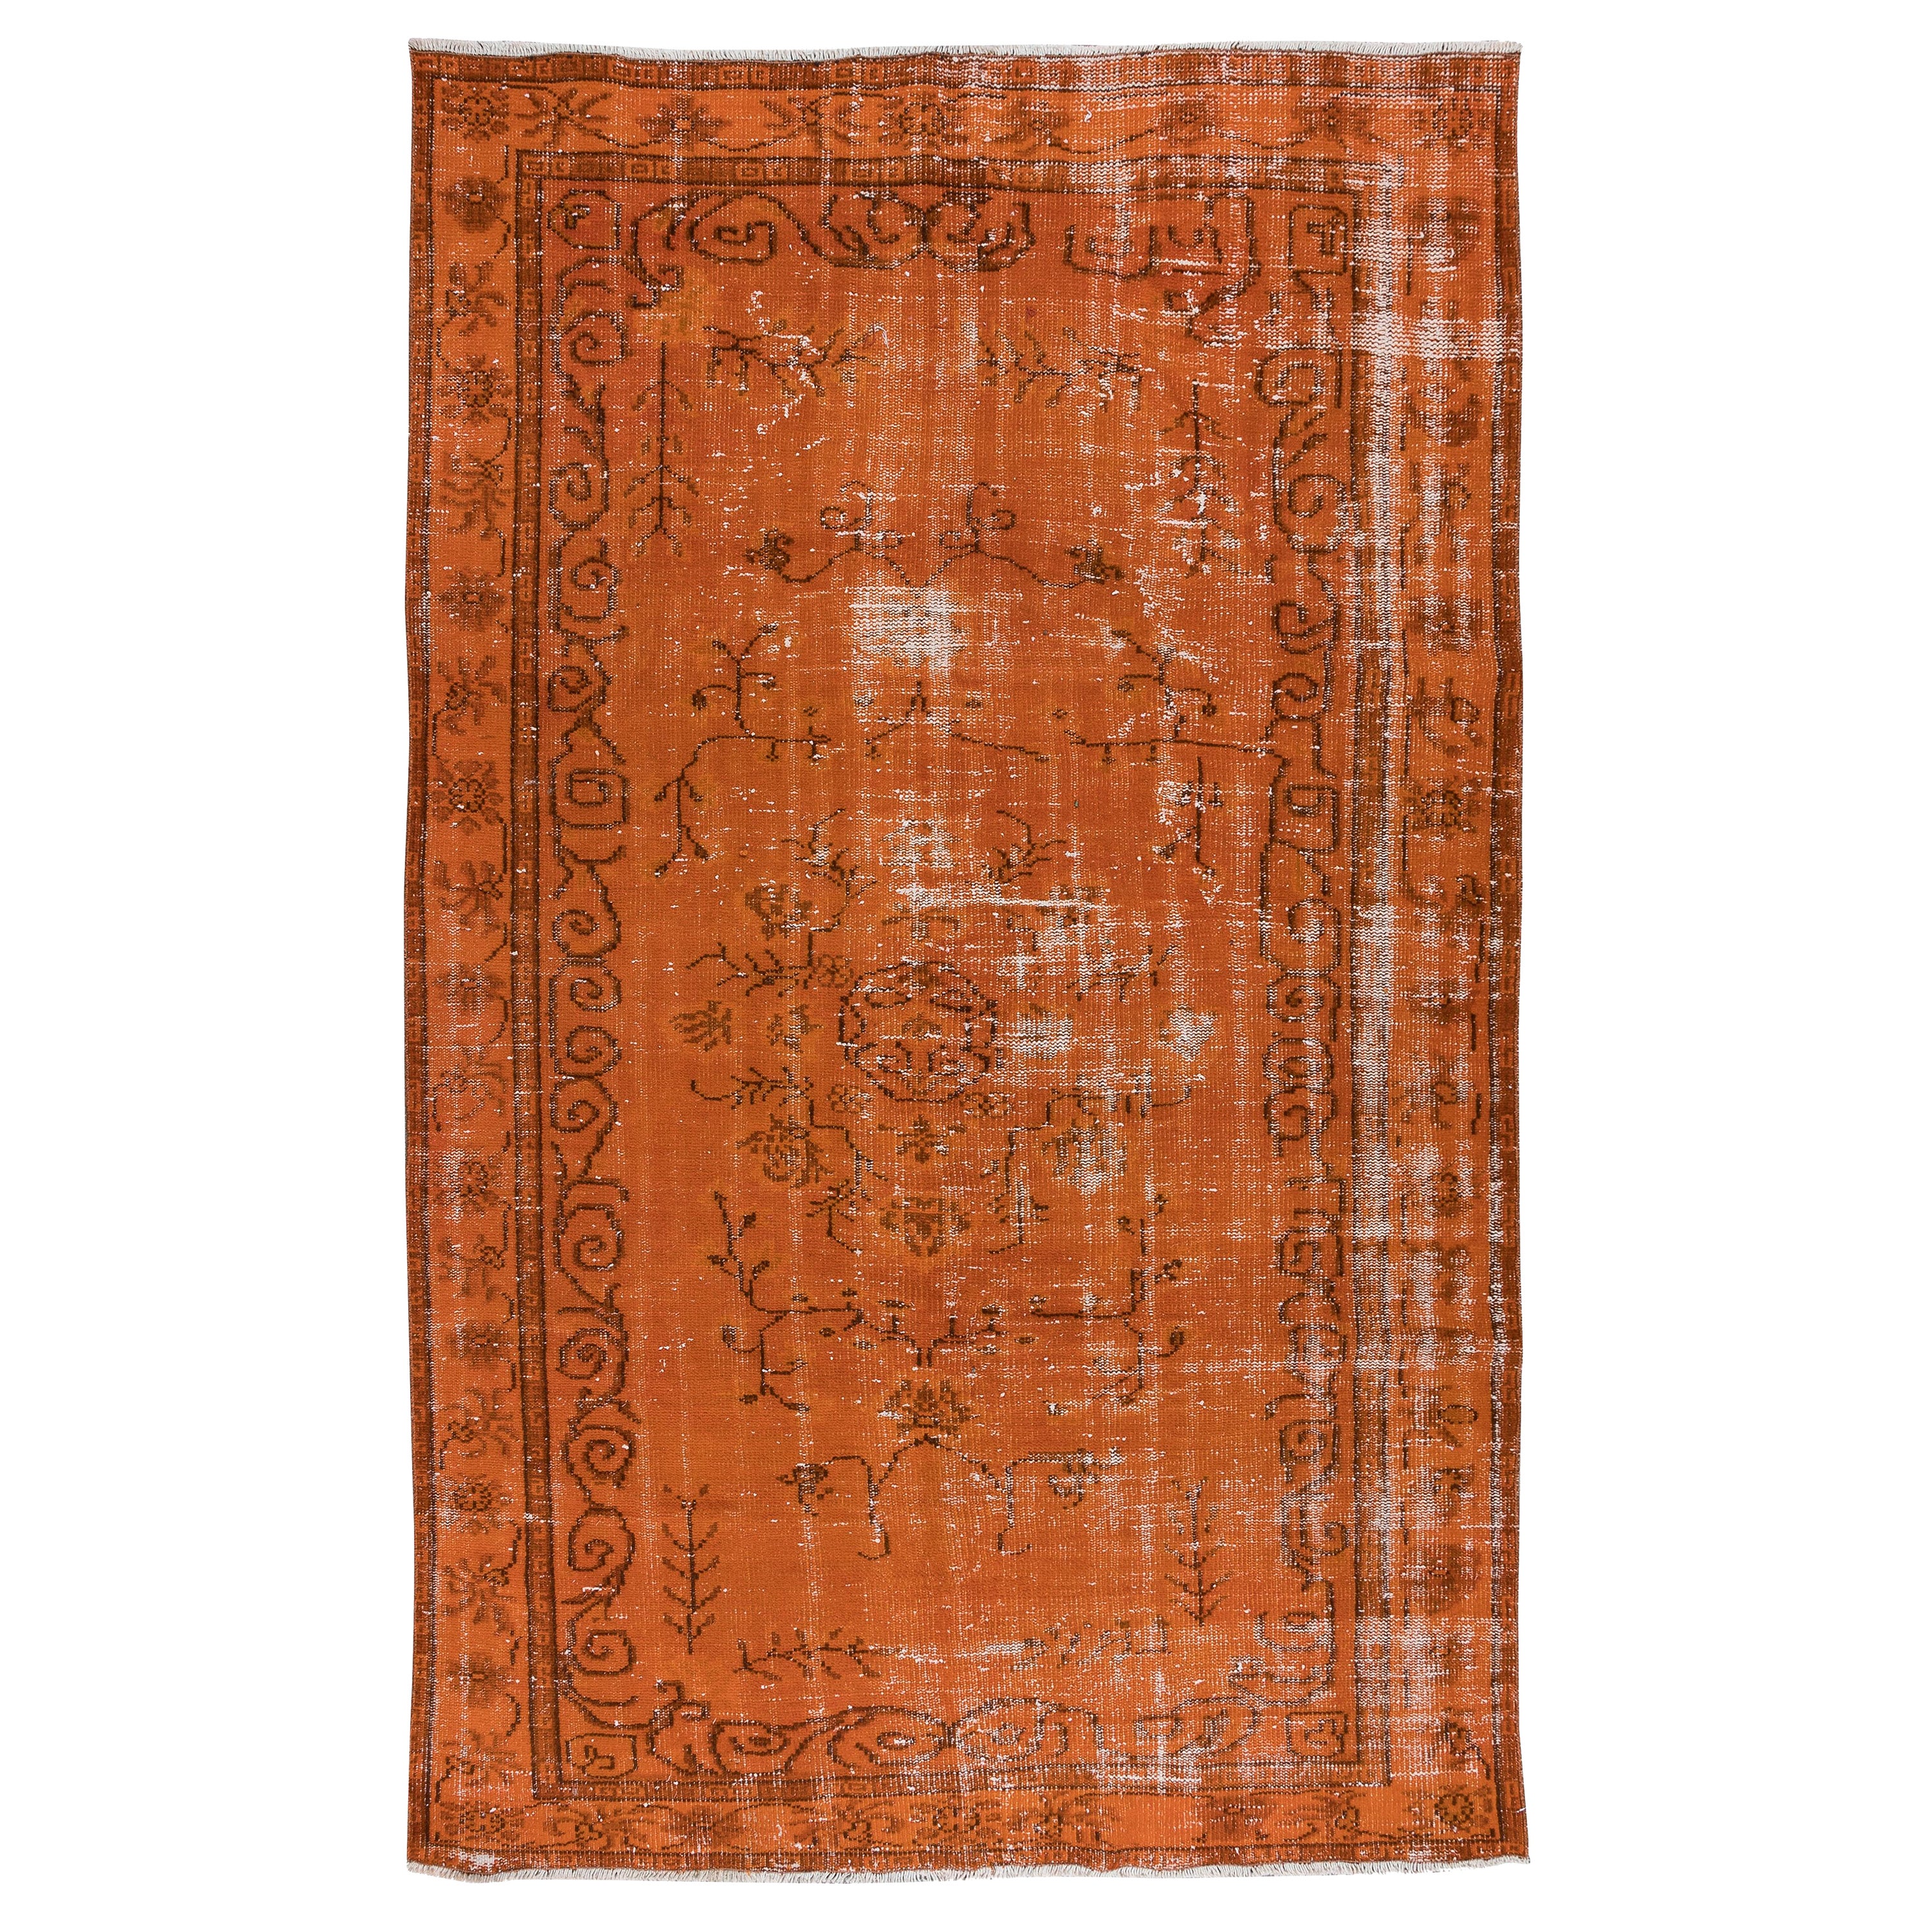 5.3x8.5 Ft Decorative Orange Handmade Room Size Rug, Upcycled Turkish Carpet For Sale